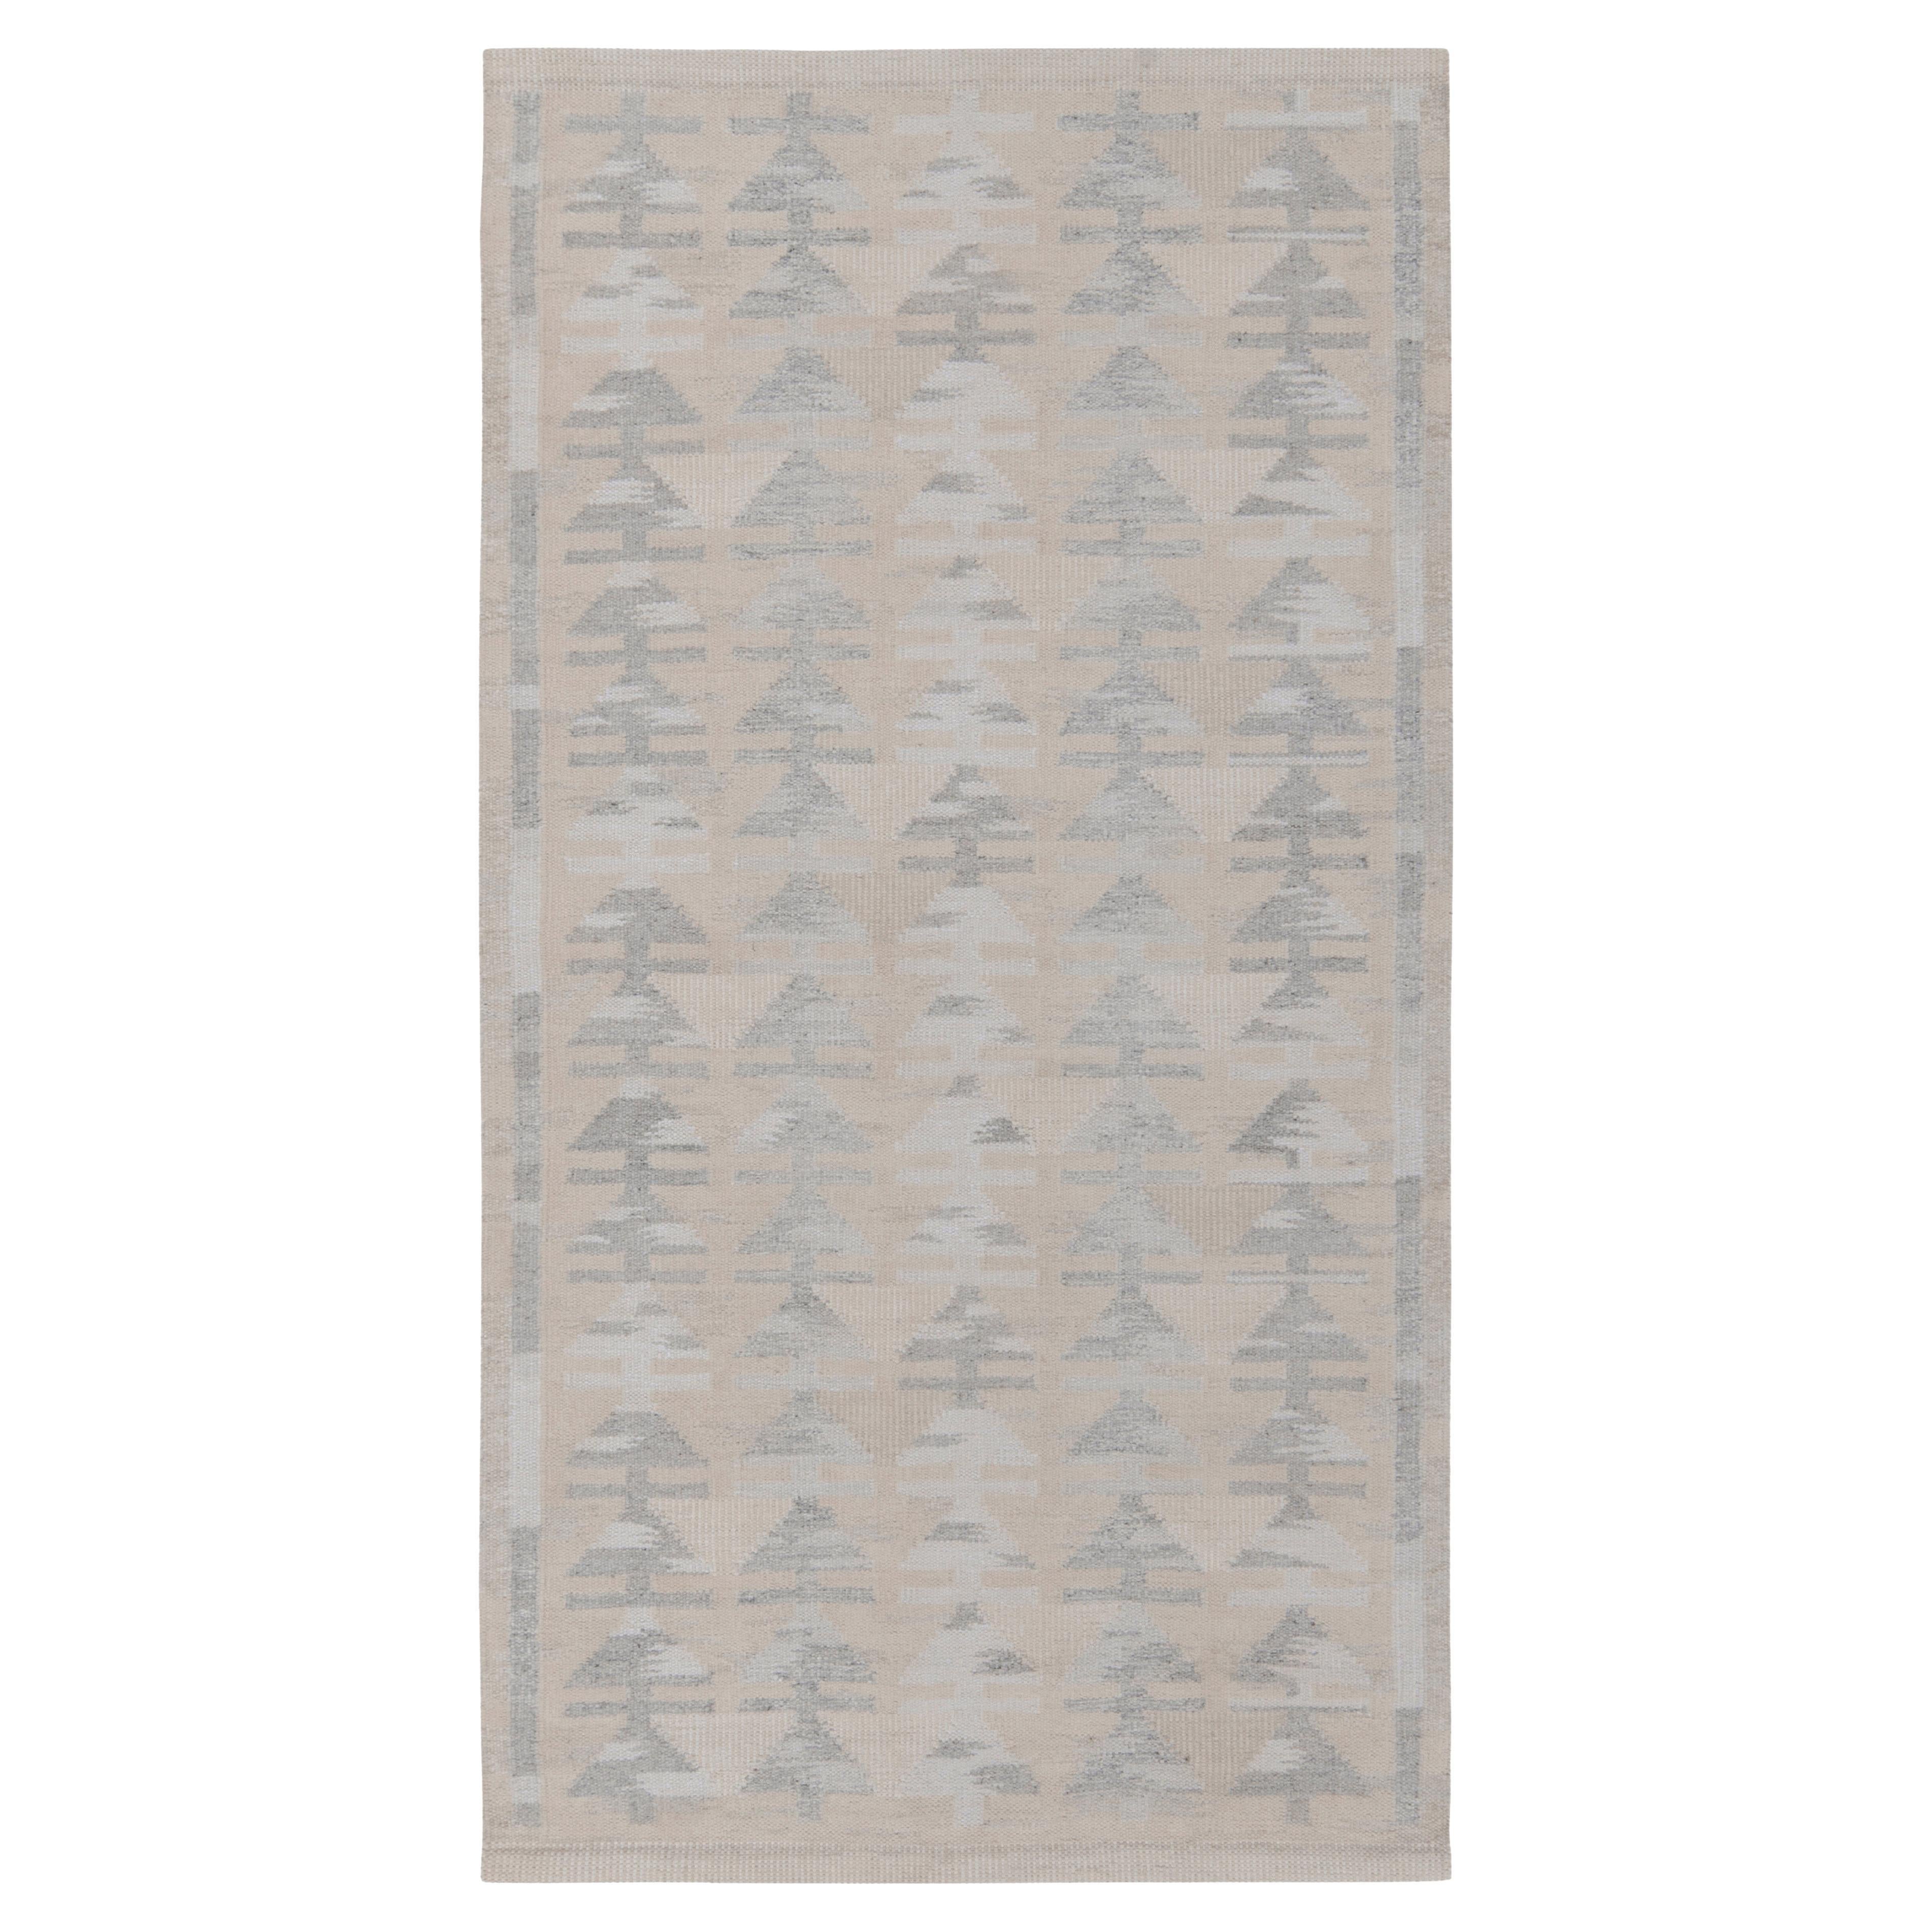 Rug & Kilim's Scandinavian Style Kilim Rug in Gray & White Geometric Pattern